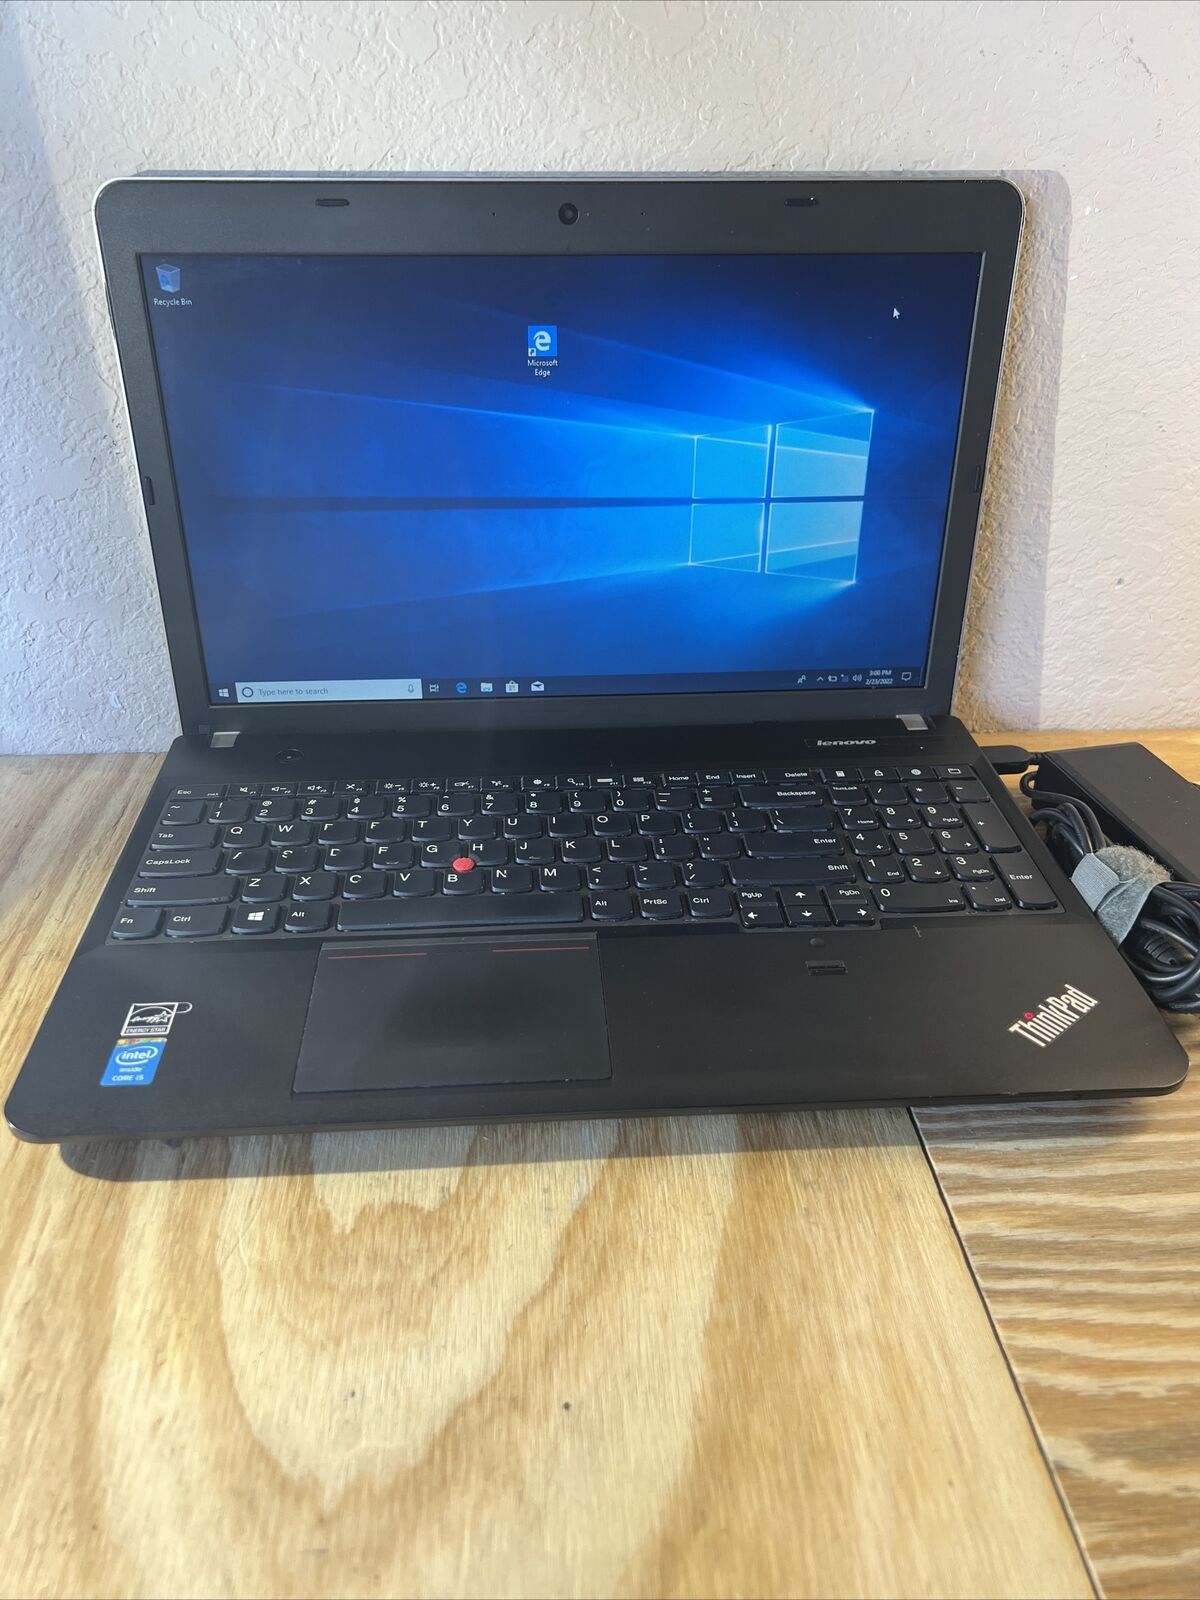 Lenovo ThinkPad E540 i5-4200M 2.5GHz 8GB RAM 1TB HDD MS Office 2019 Win10